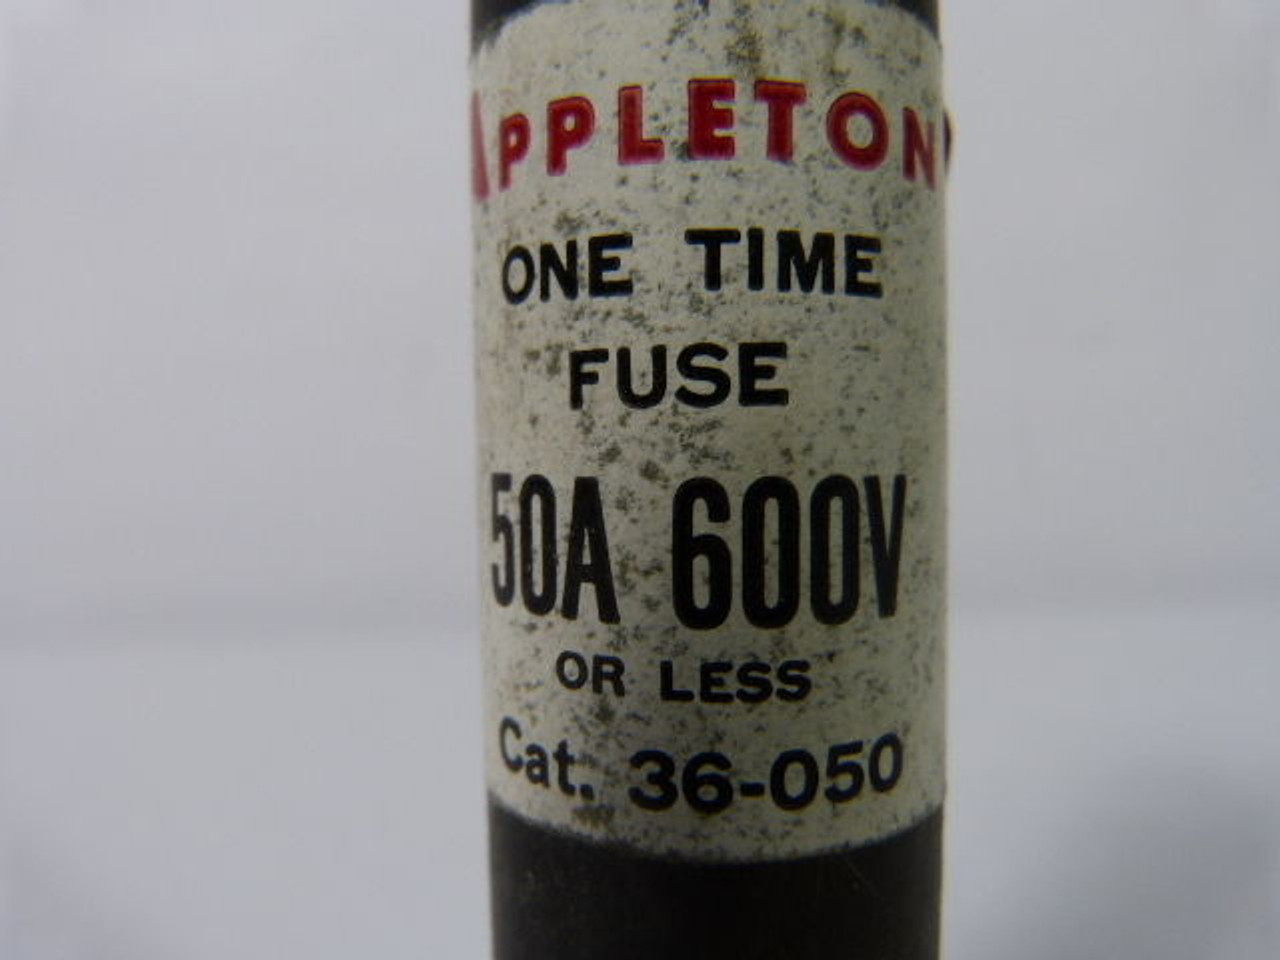 Appleton 36-050 One Time Fuse 50A 600V USED